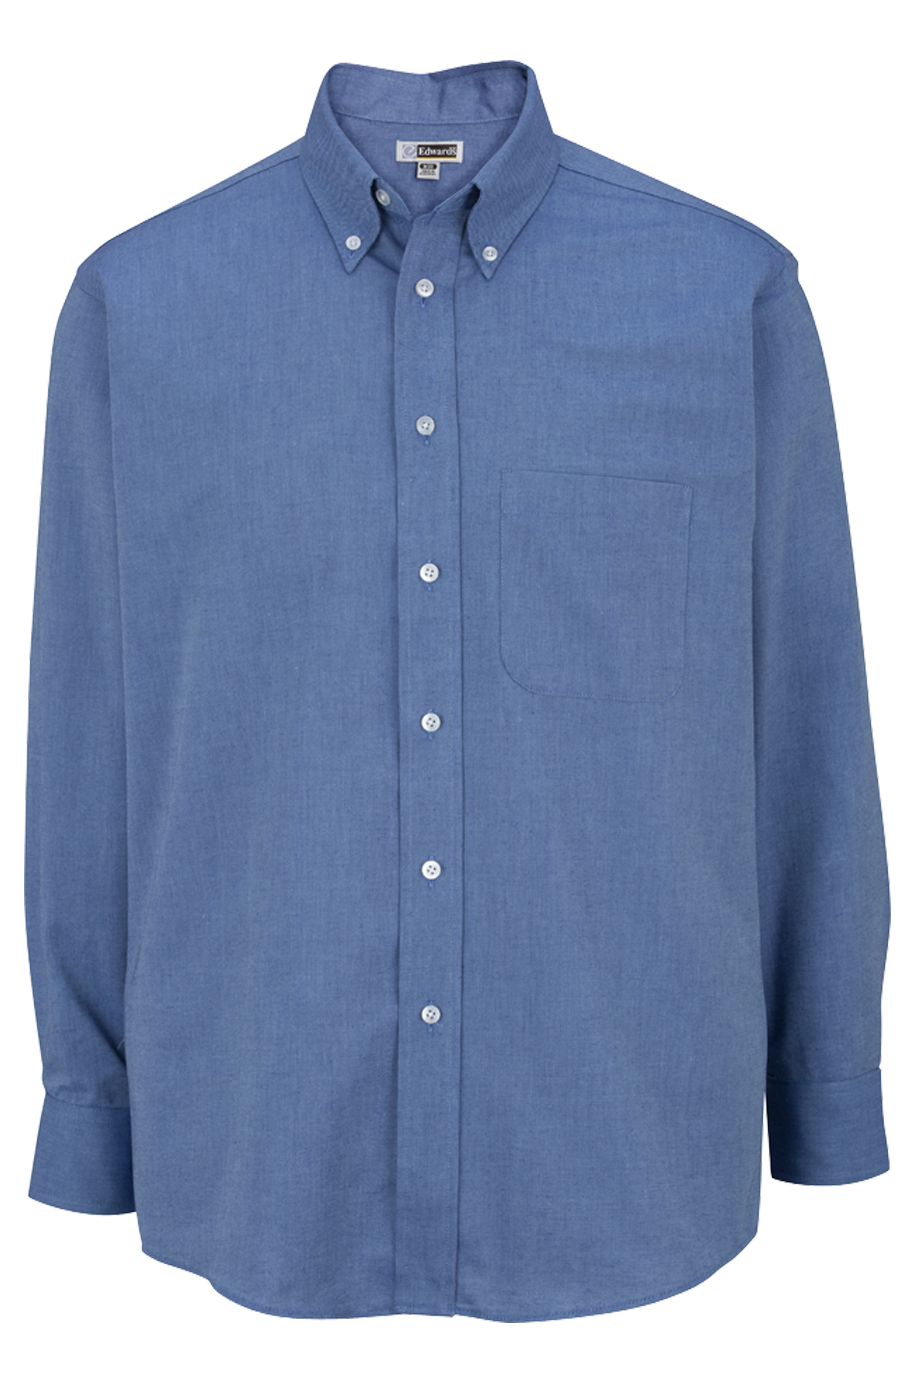 Men's Long Sleeve Oxford Shirt 1077